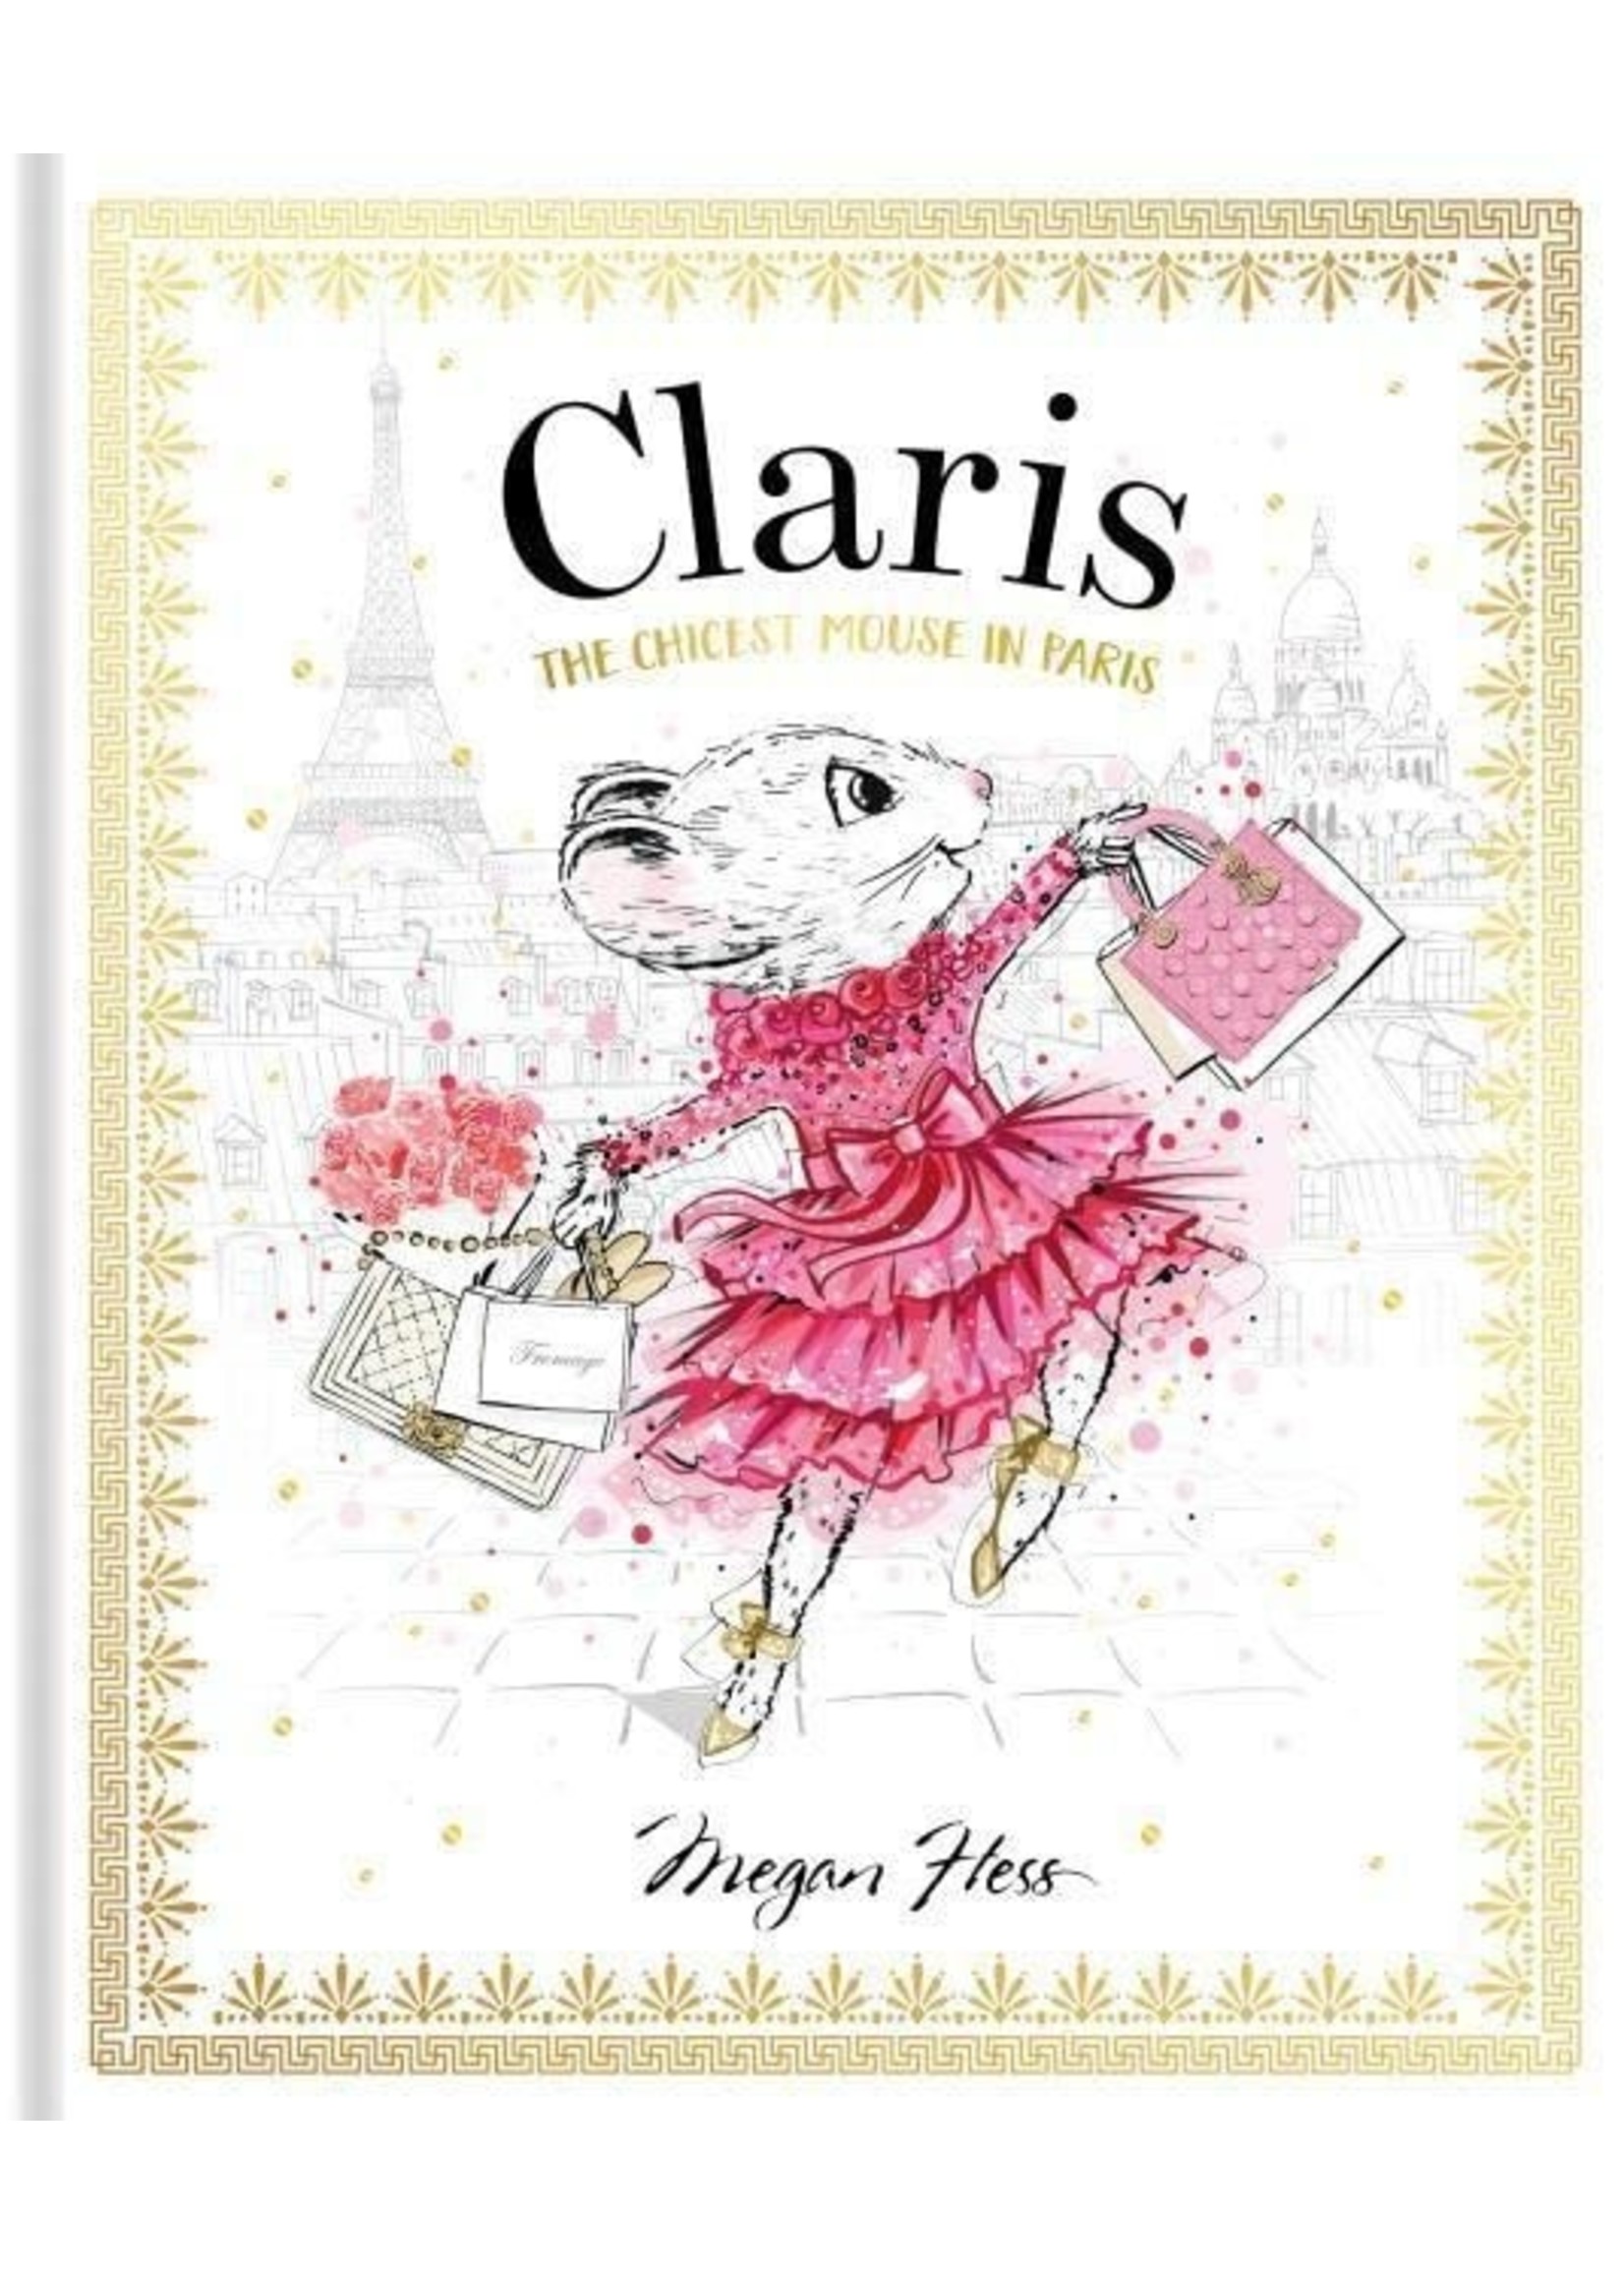 Claris Chicest Mouse in Paris